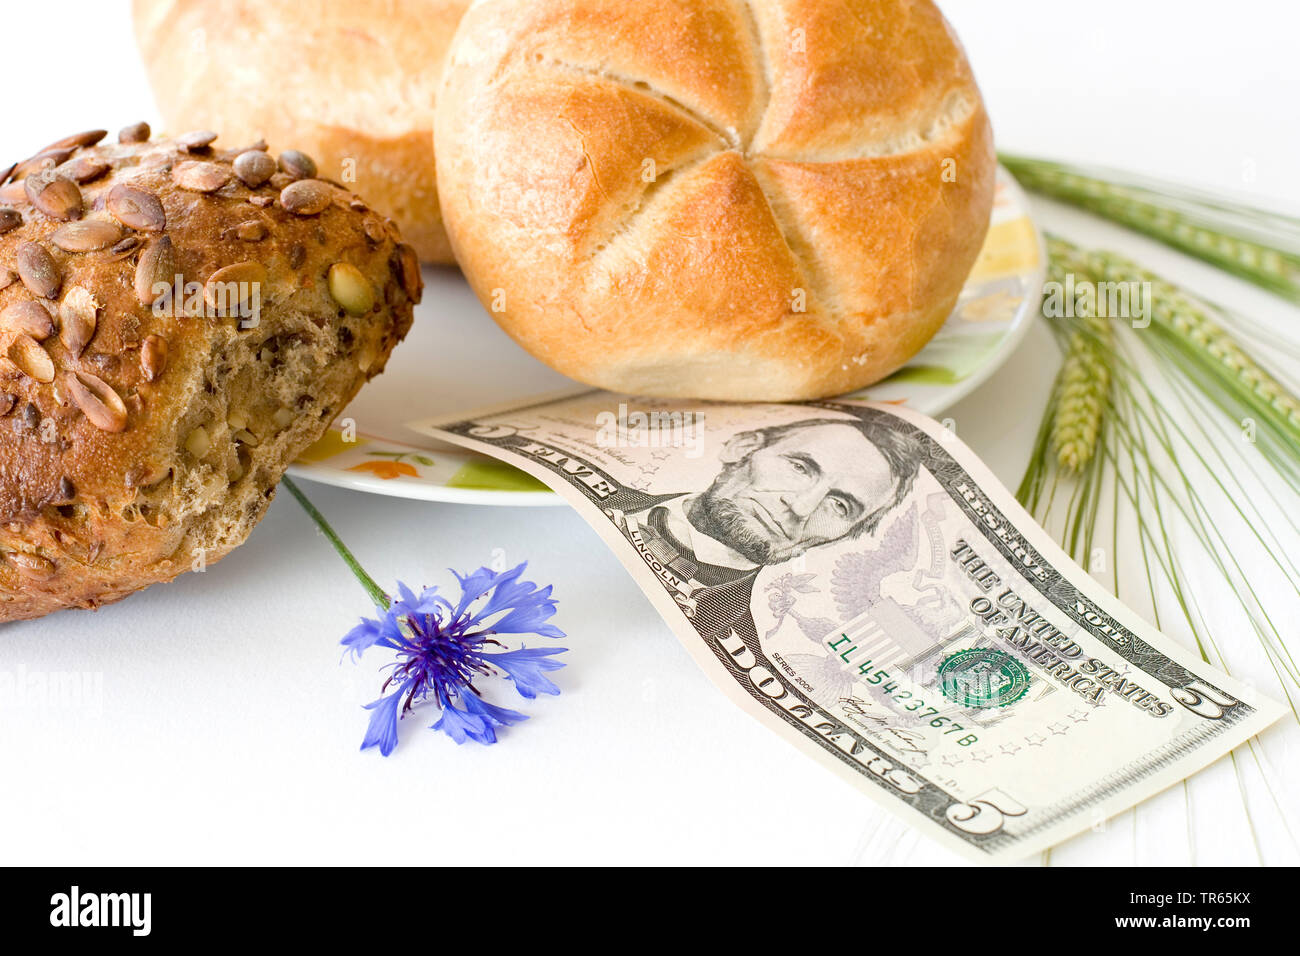 bread roll s with 5 dollar bill, cornflower and barley, USA Stock Photo